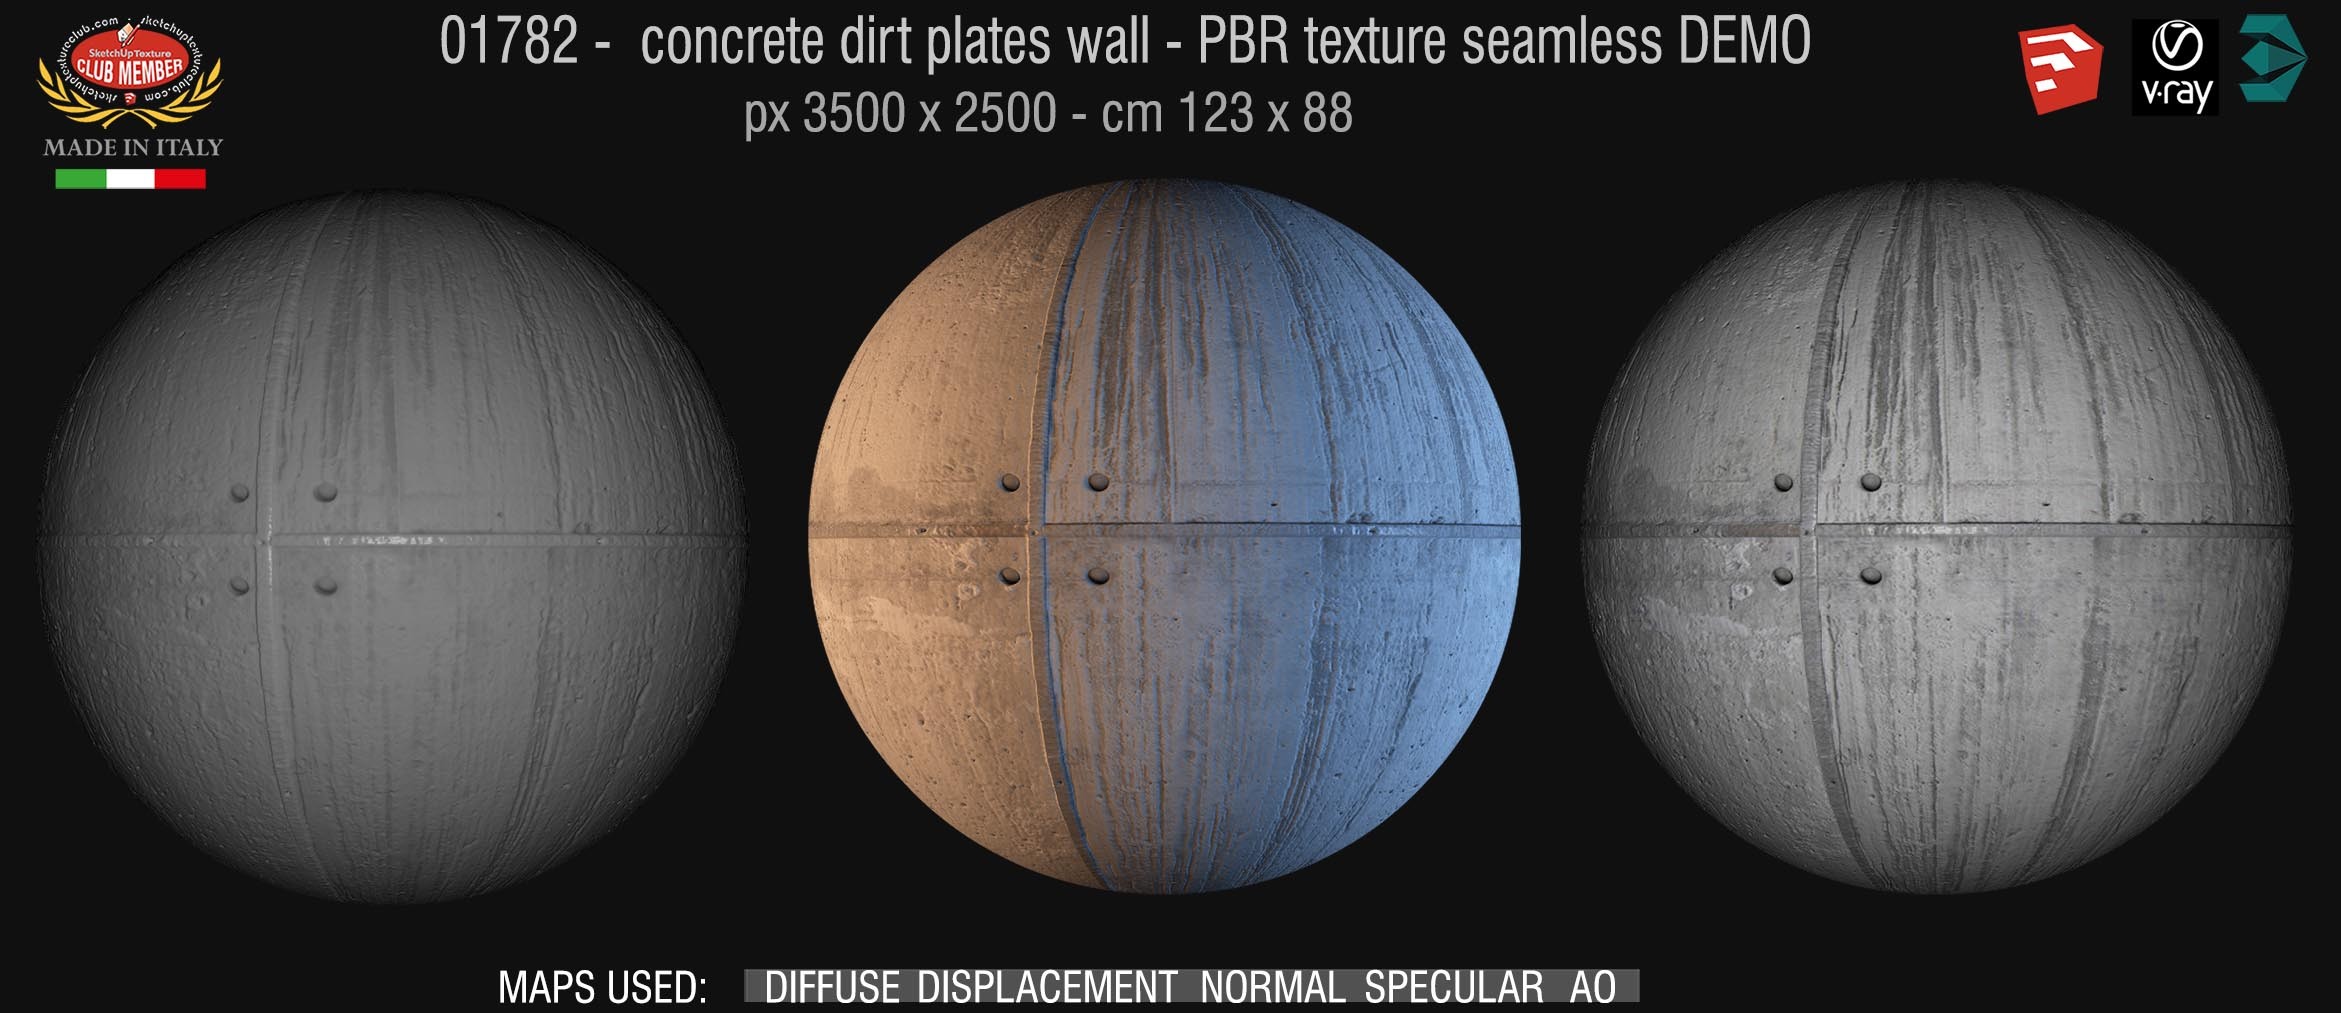 01782 concrete dirt plates wall PBR texture seamless DEMO